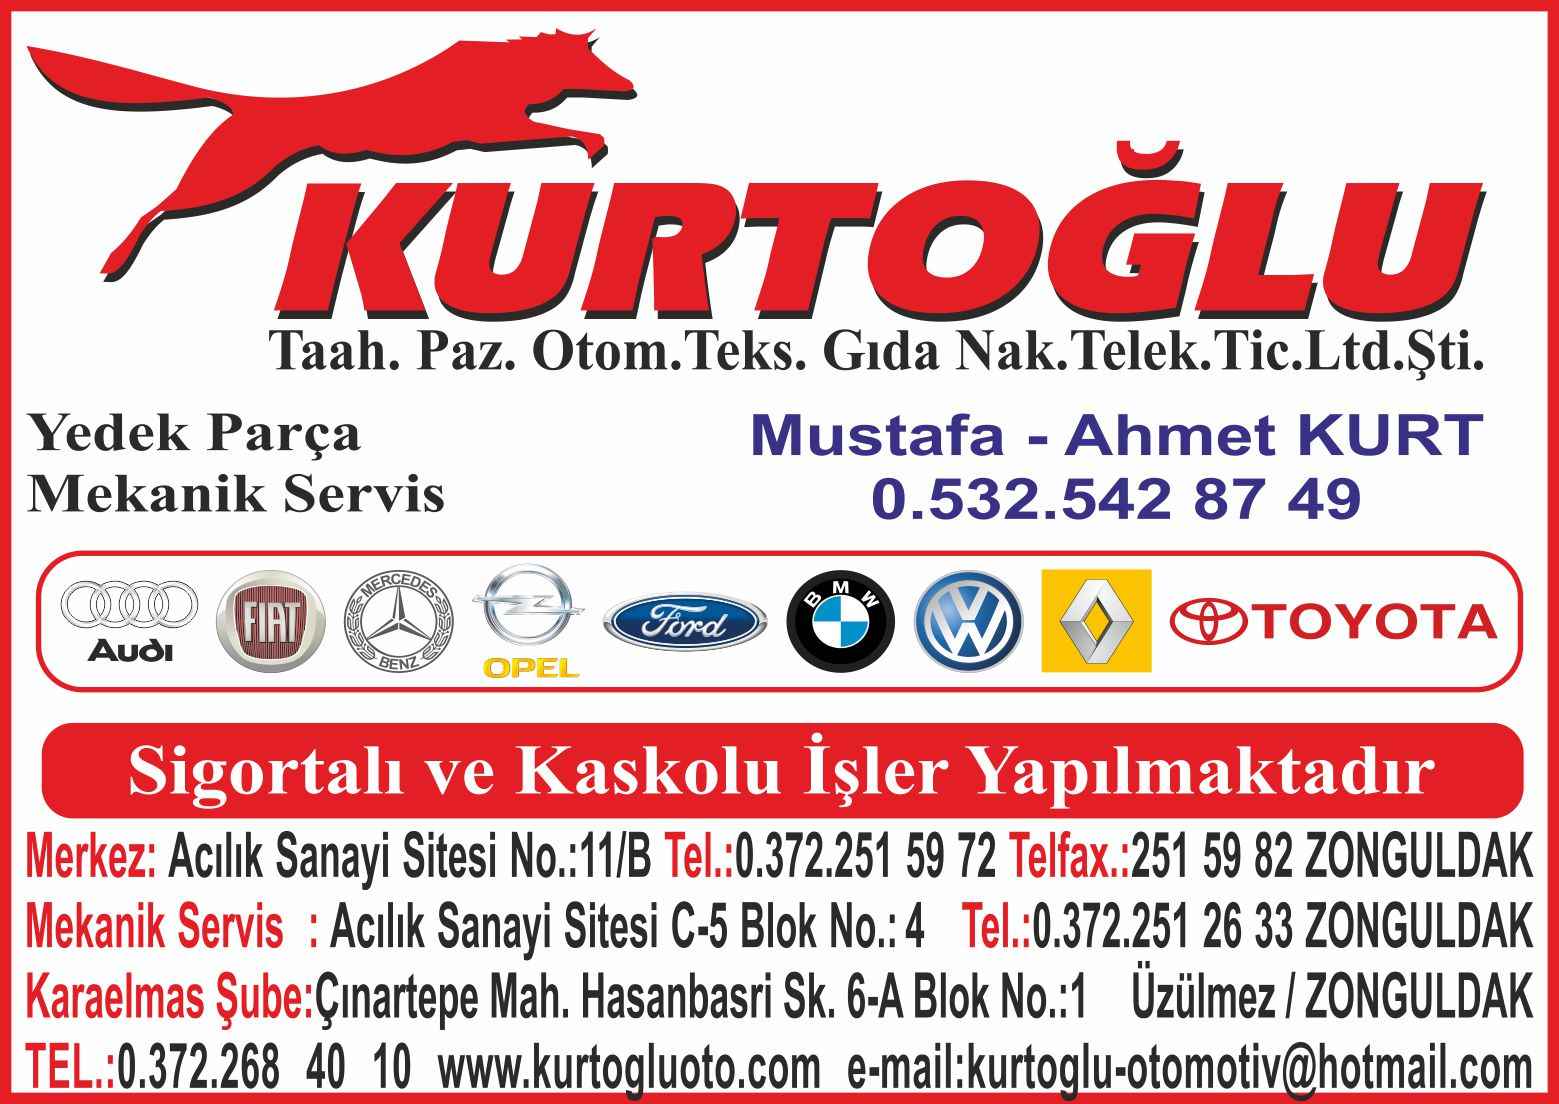 Kurtoğlu Otomotiv Zonguldak